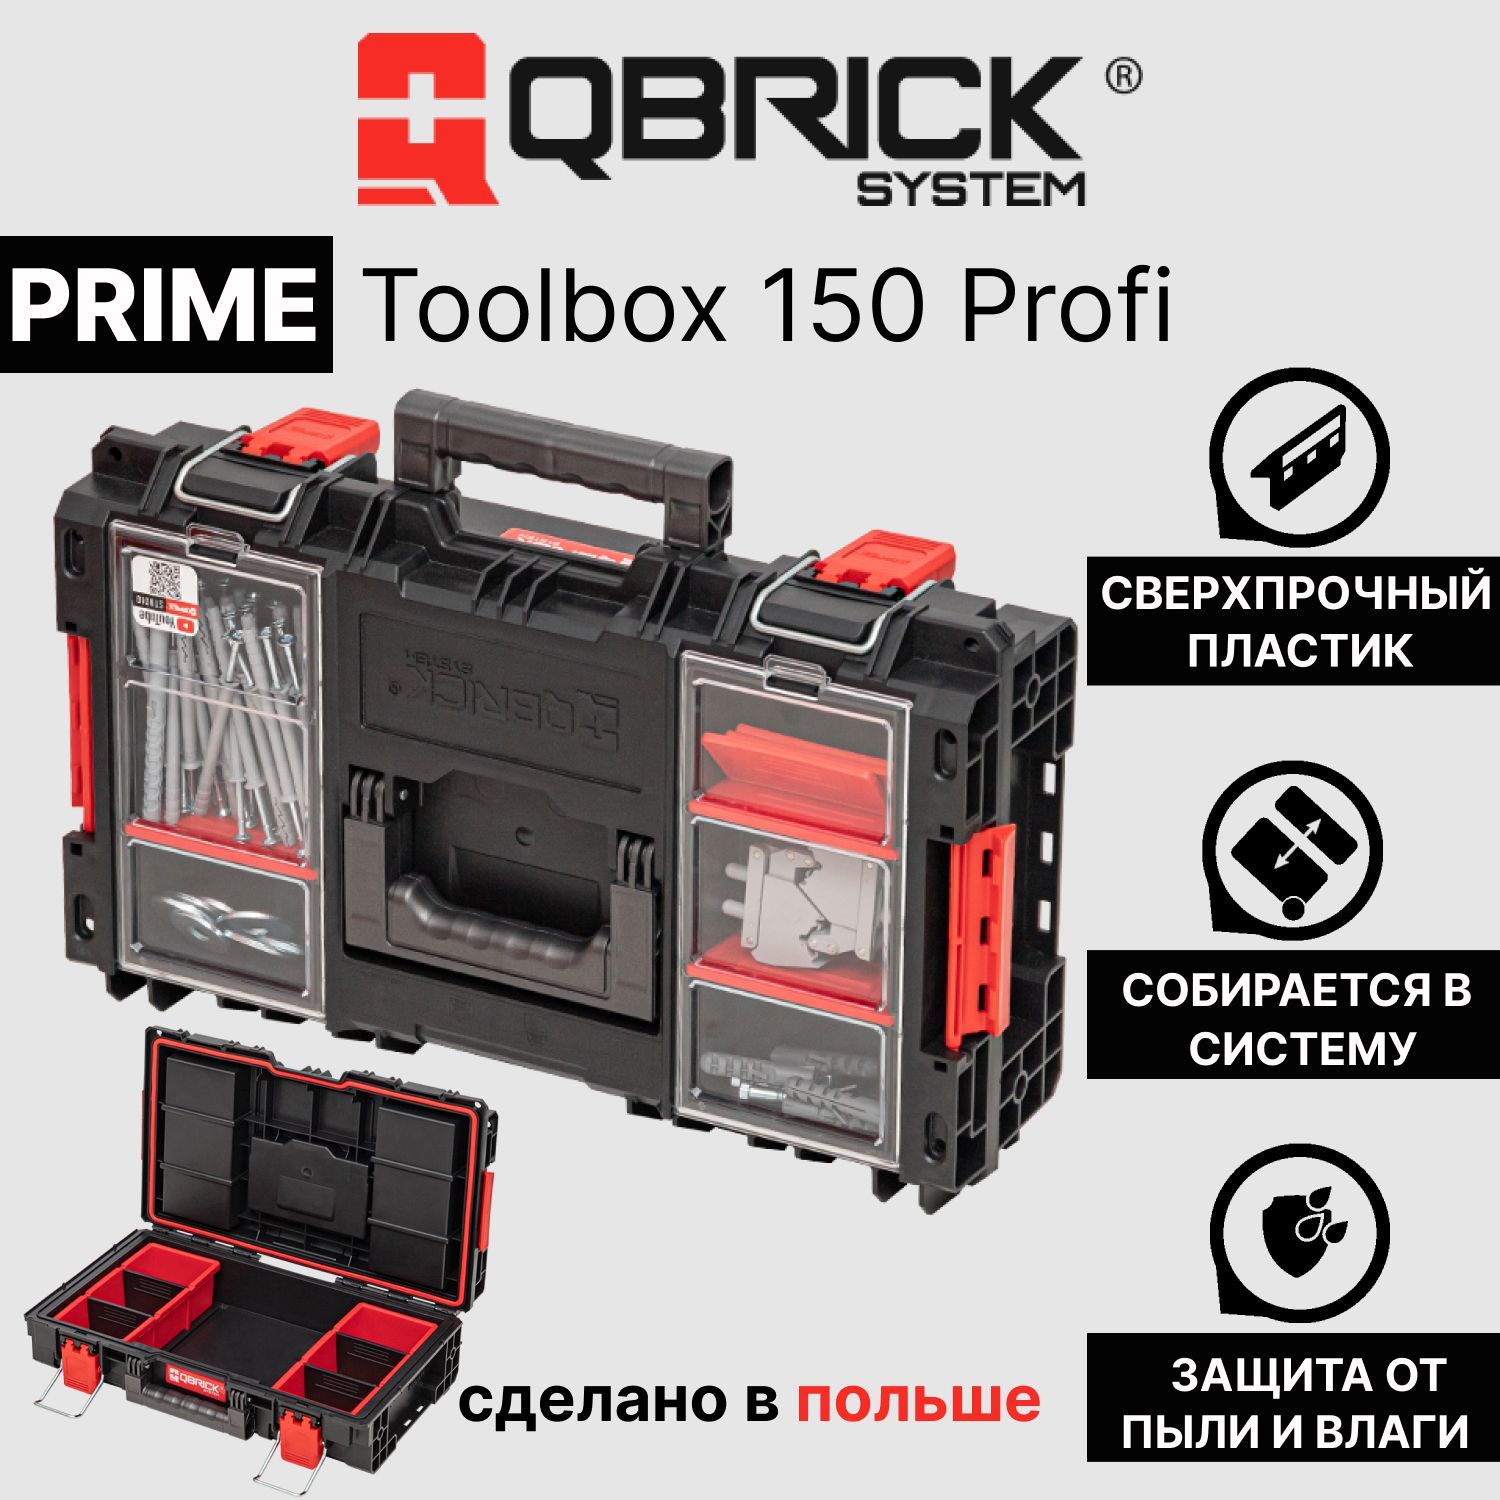 Qbrick system prime. Ящик для инструментов Qbrick System Prime Toolbox 250. Qbrick System Pro Drawer 3 обзор.